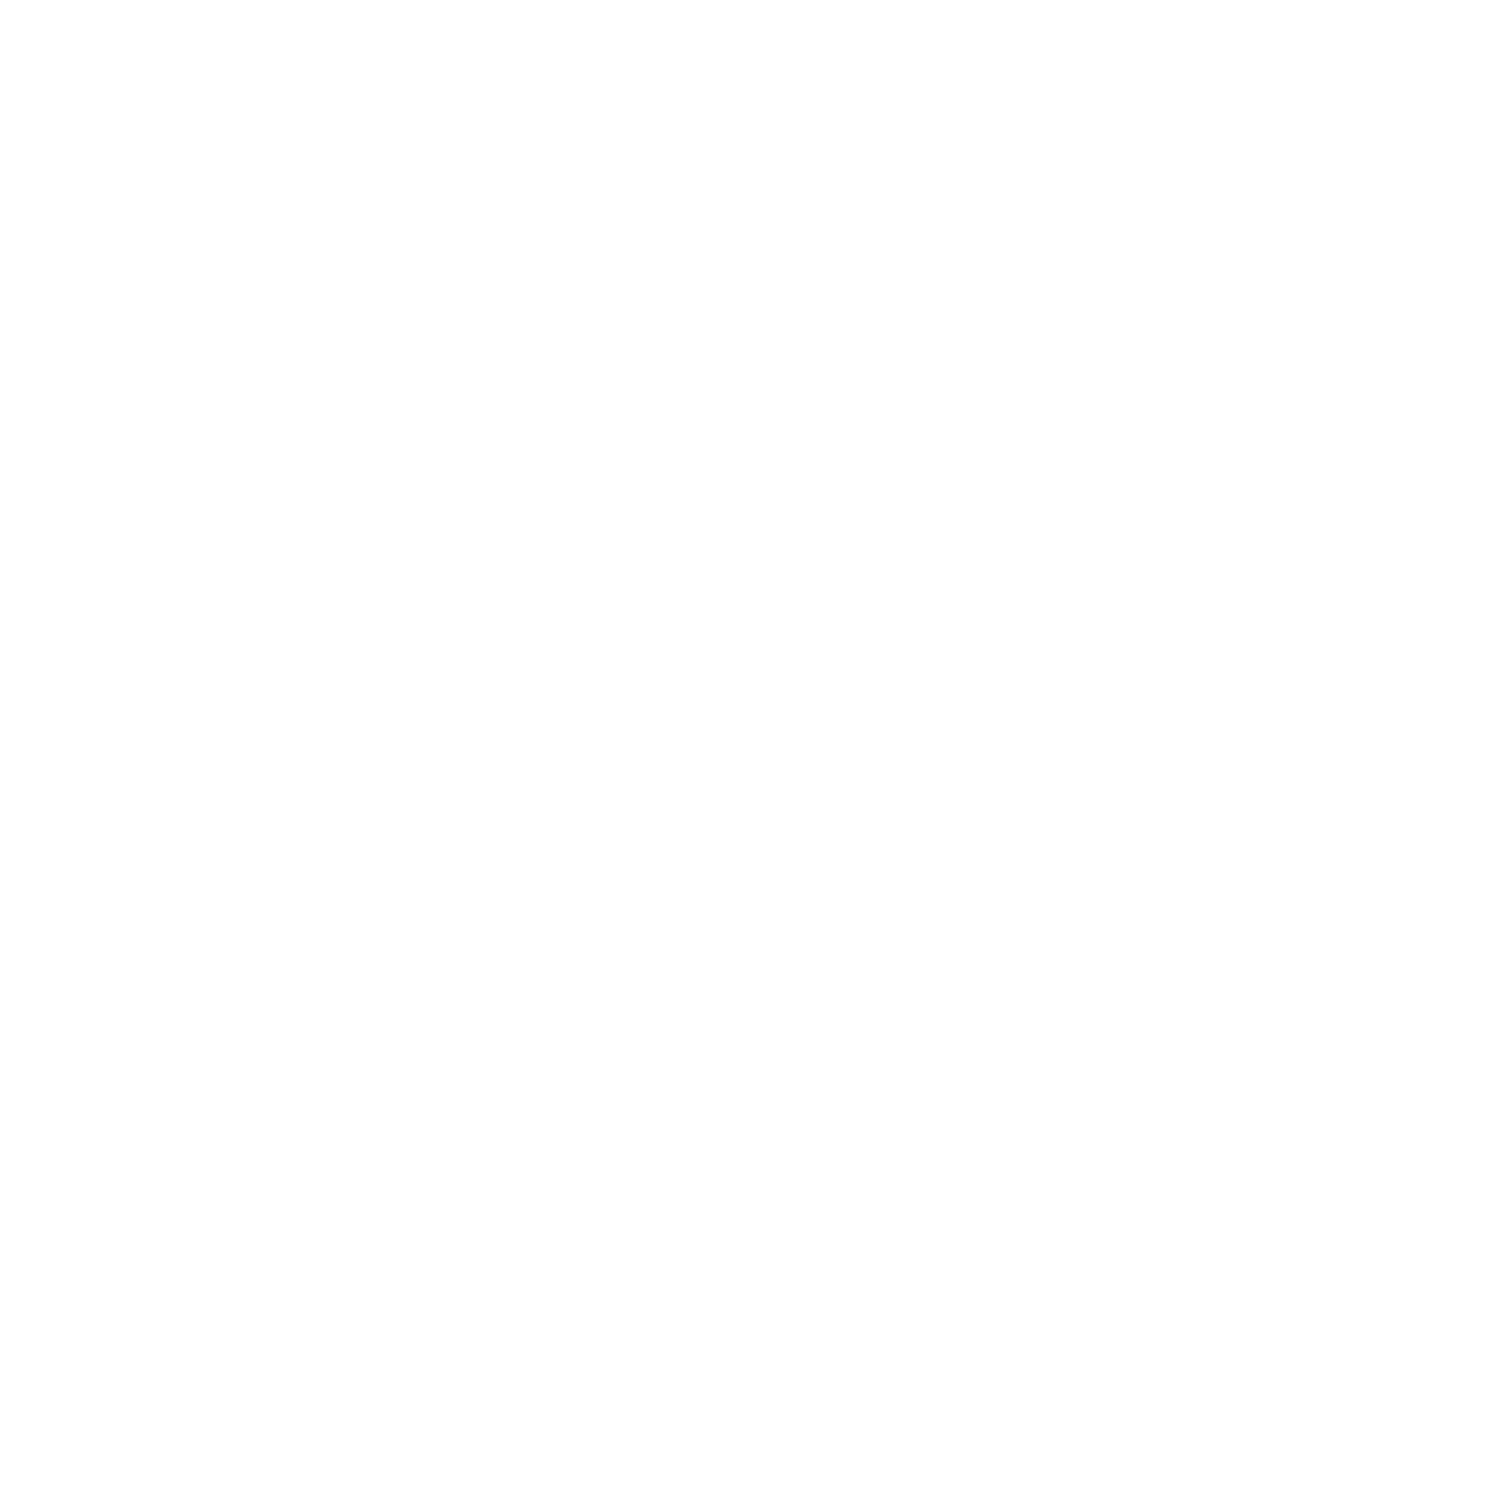 Eric Pike Photography